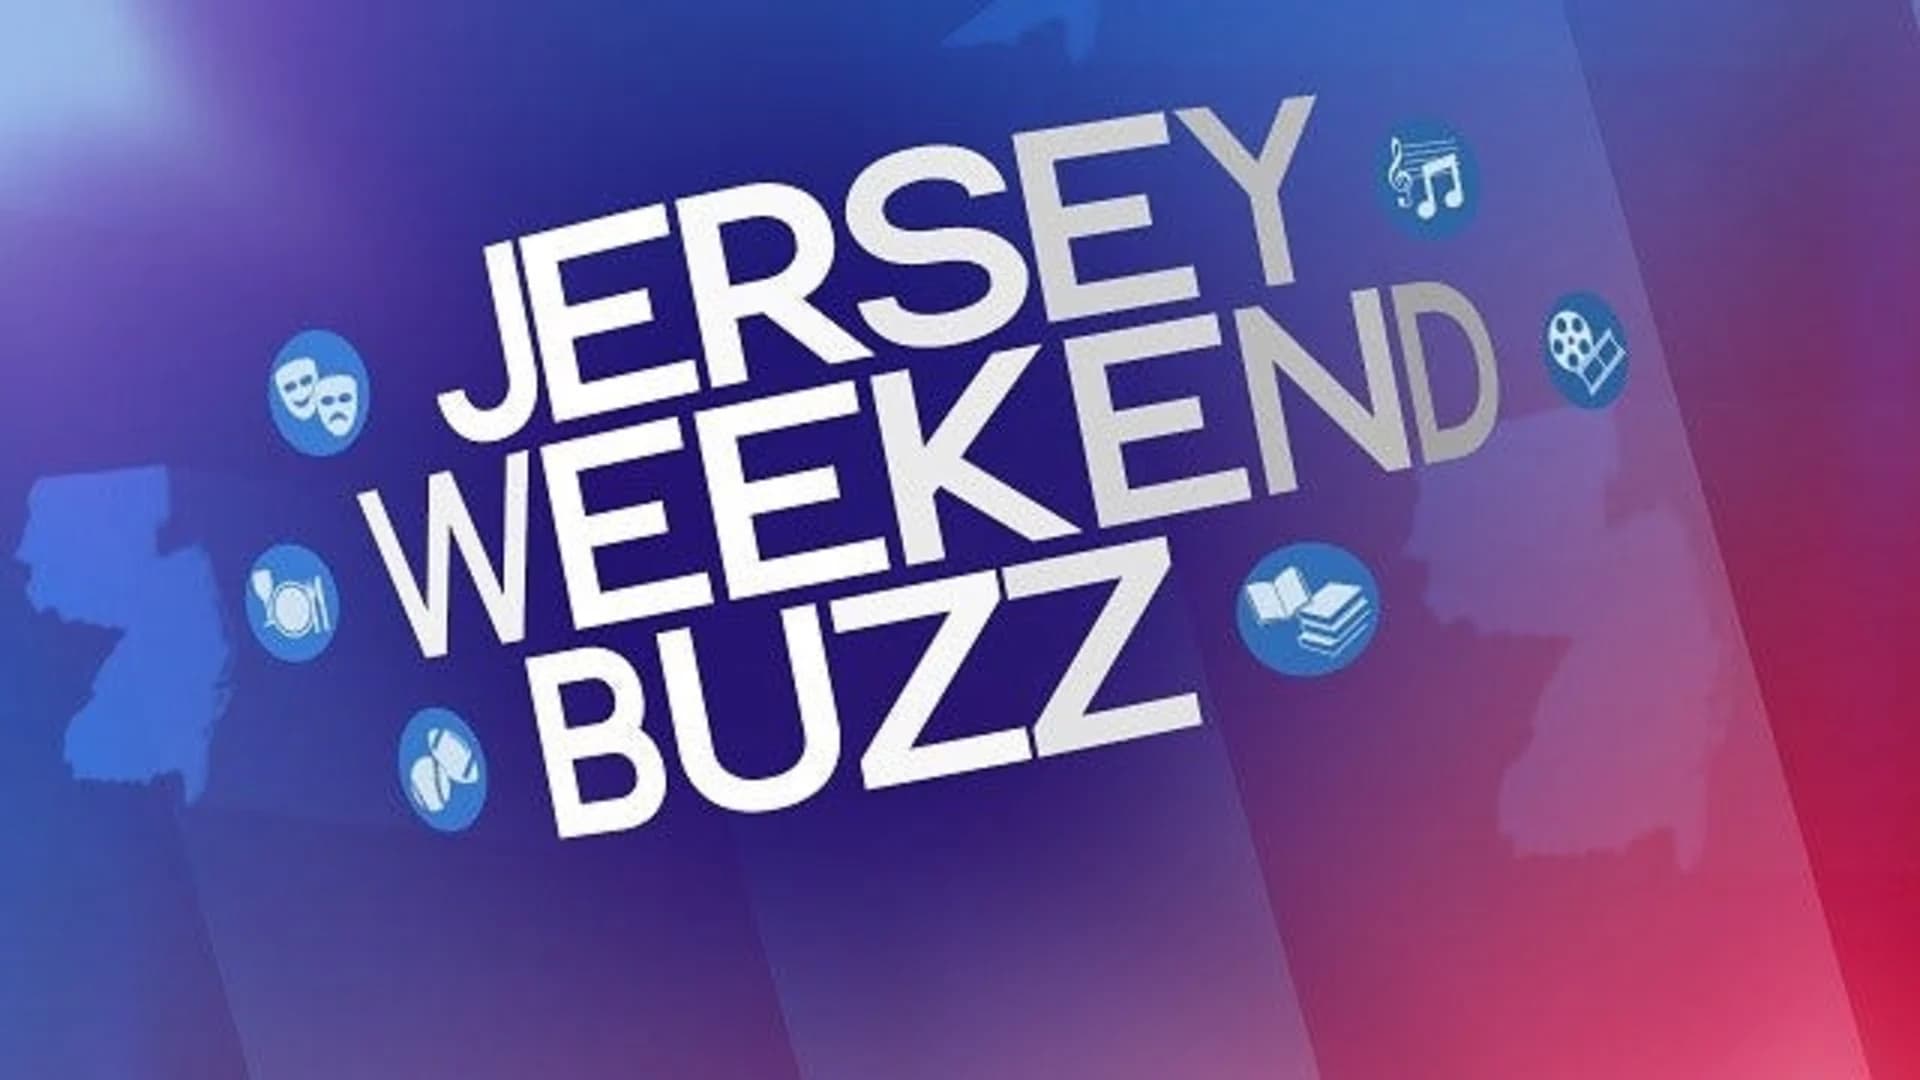 Jersey Weekend Buzz: June 10-11